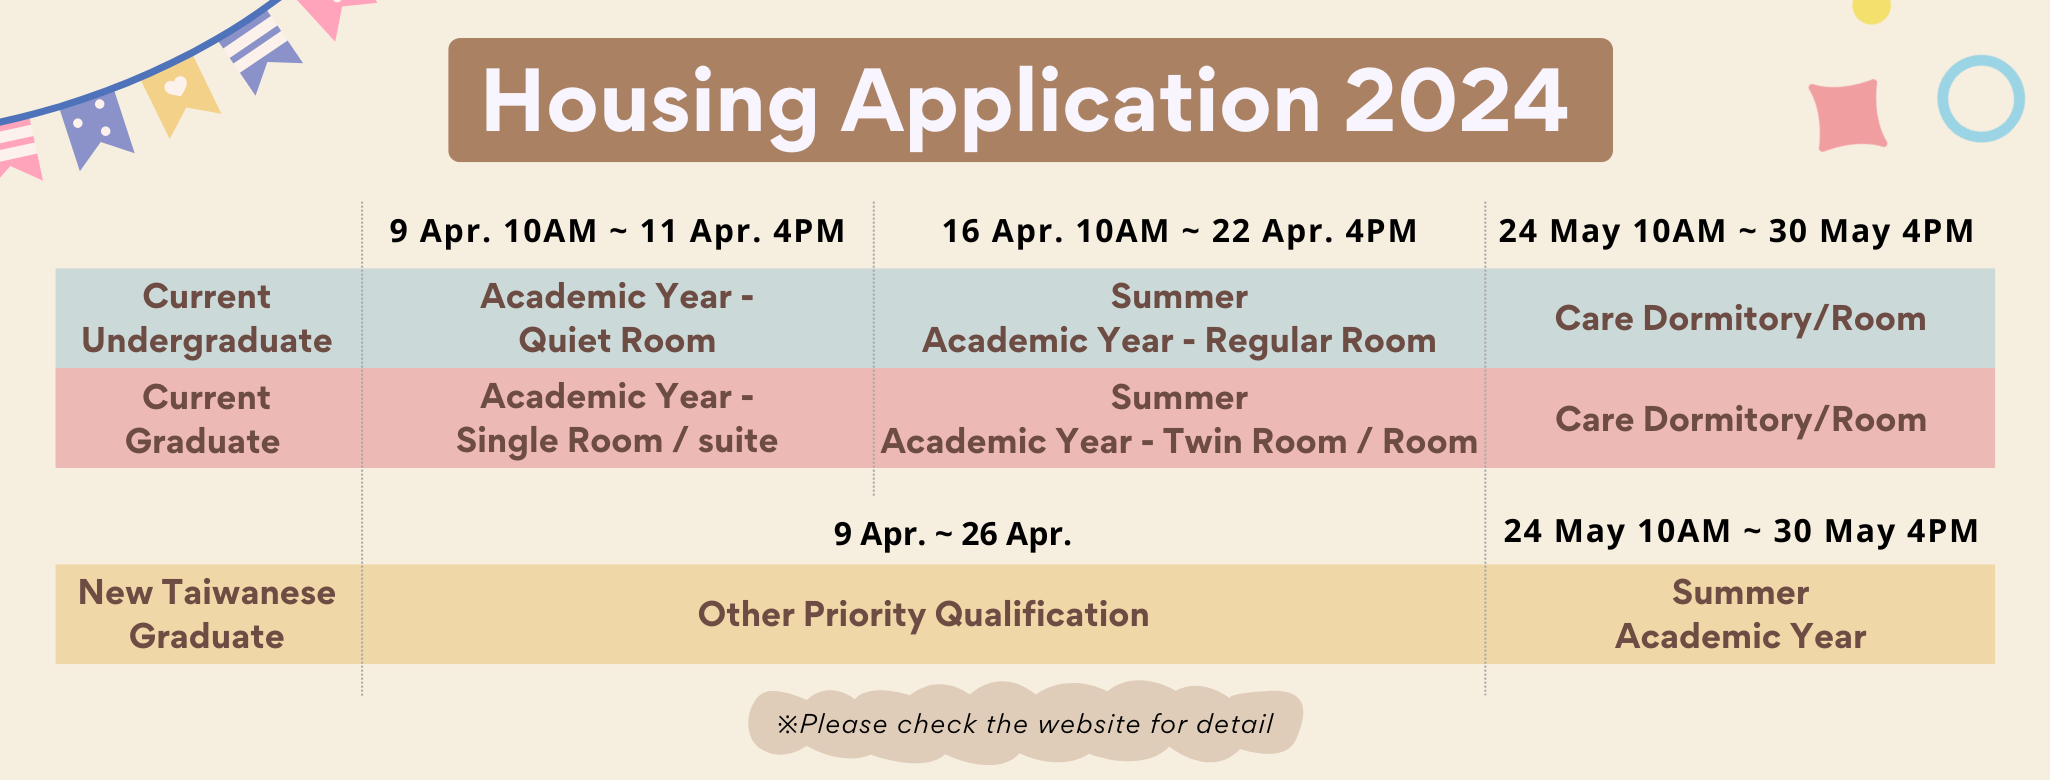 e Schedule of Housing Application 2024